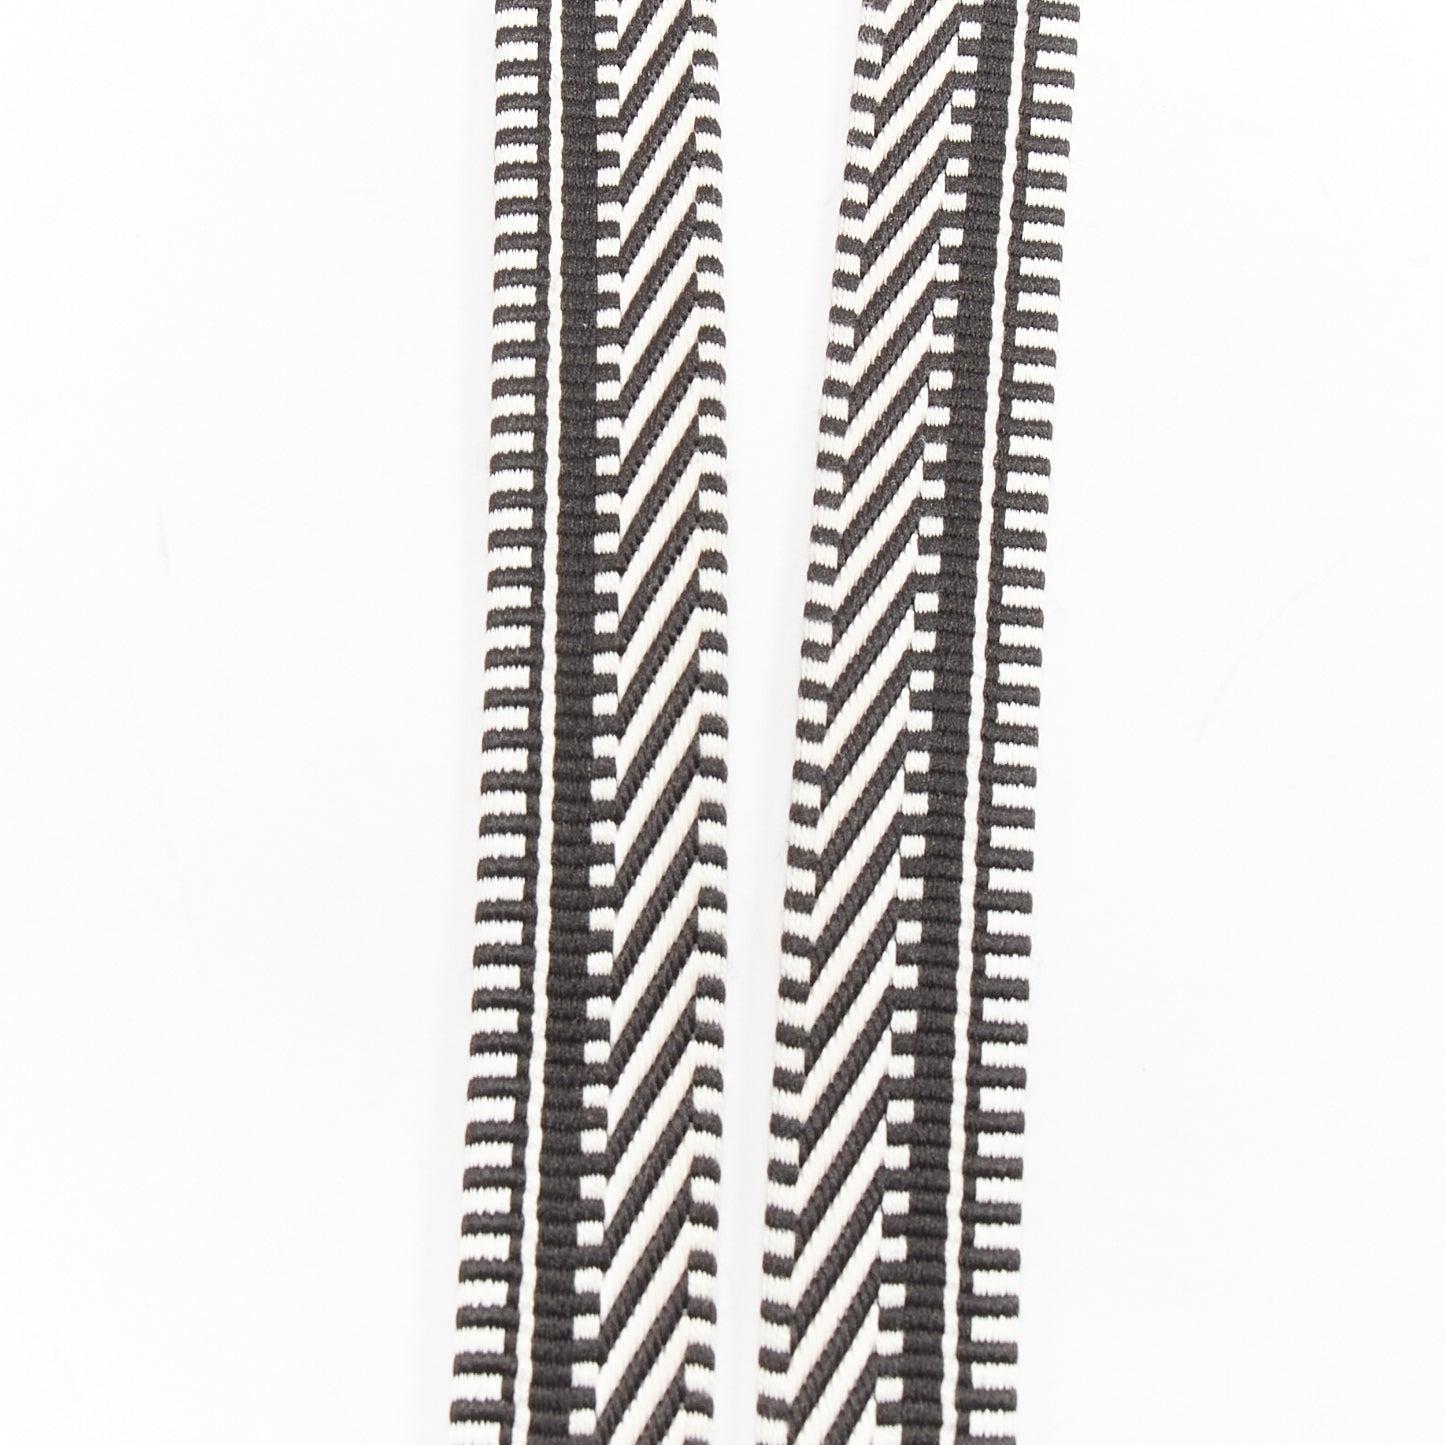 HERMES Sangle 25 black white chevron stripes woven silver hardware bag strap For Sale 1